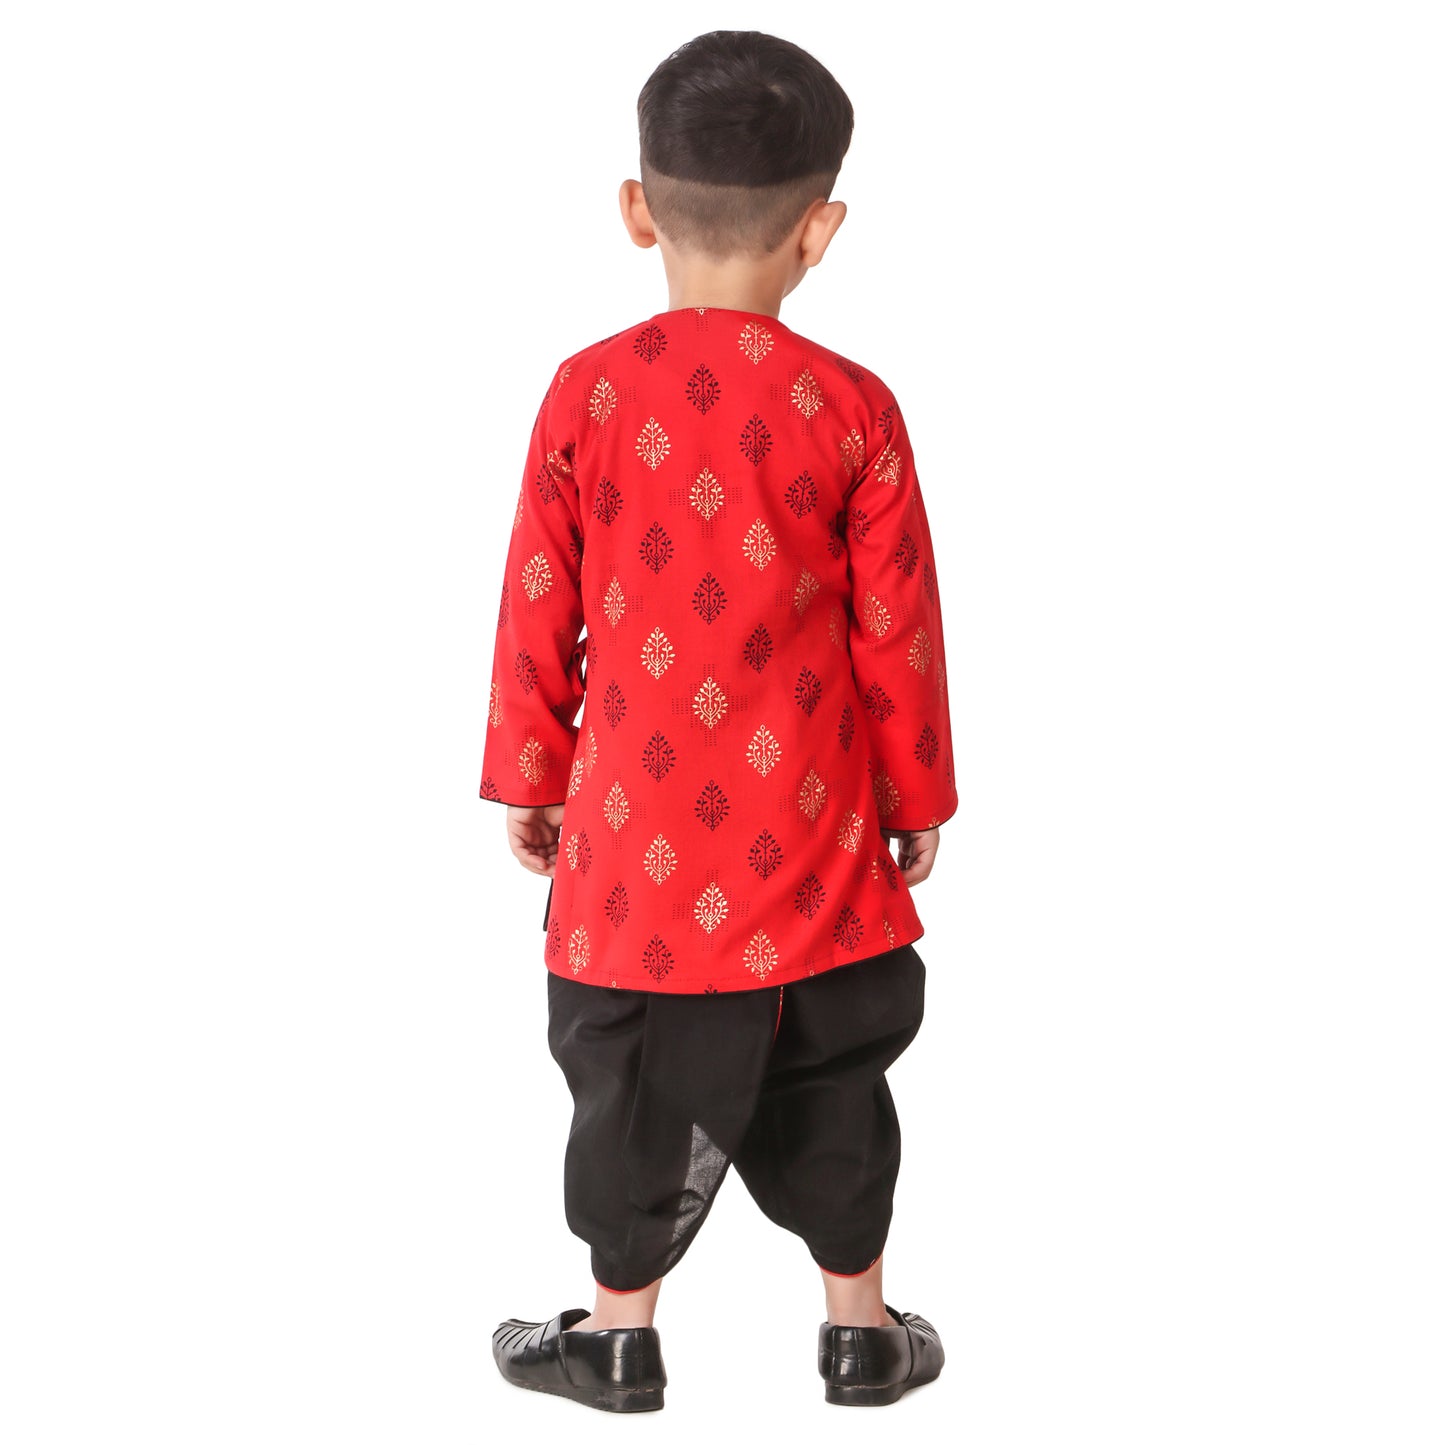 Red Dhoti Kurta for Boys, Ages 3 Months-16 Years, Cotton, Angrakha Style, Khadi Block Print